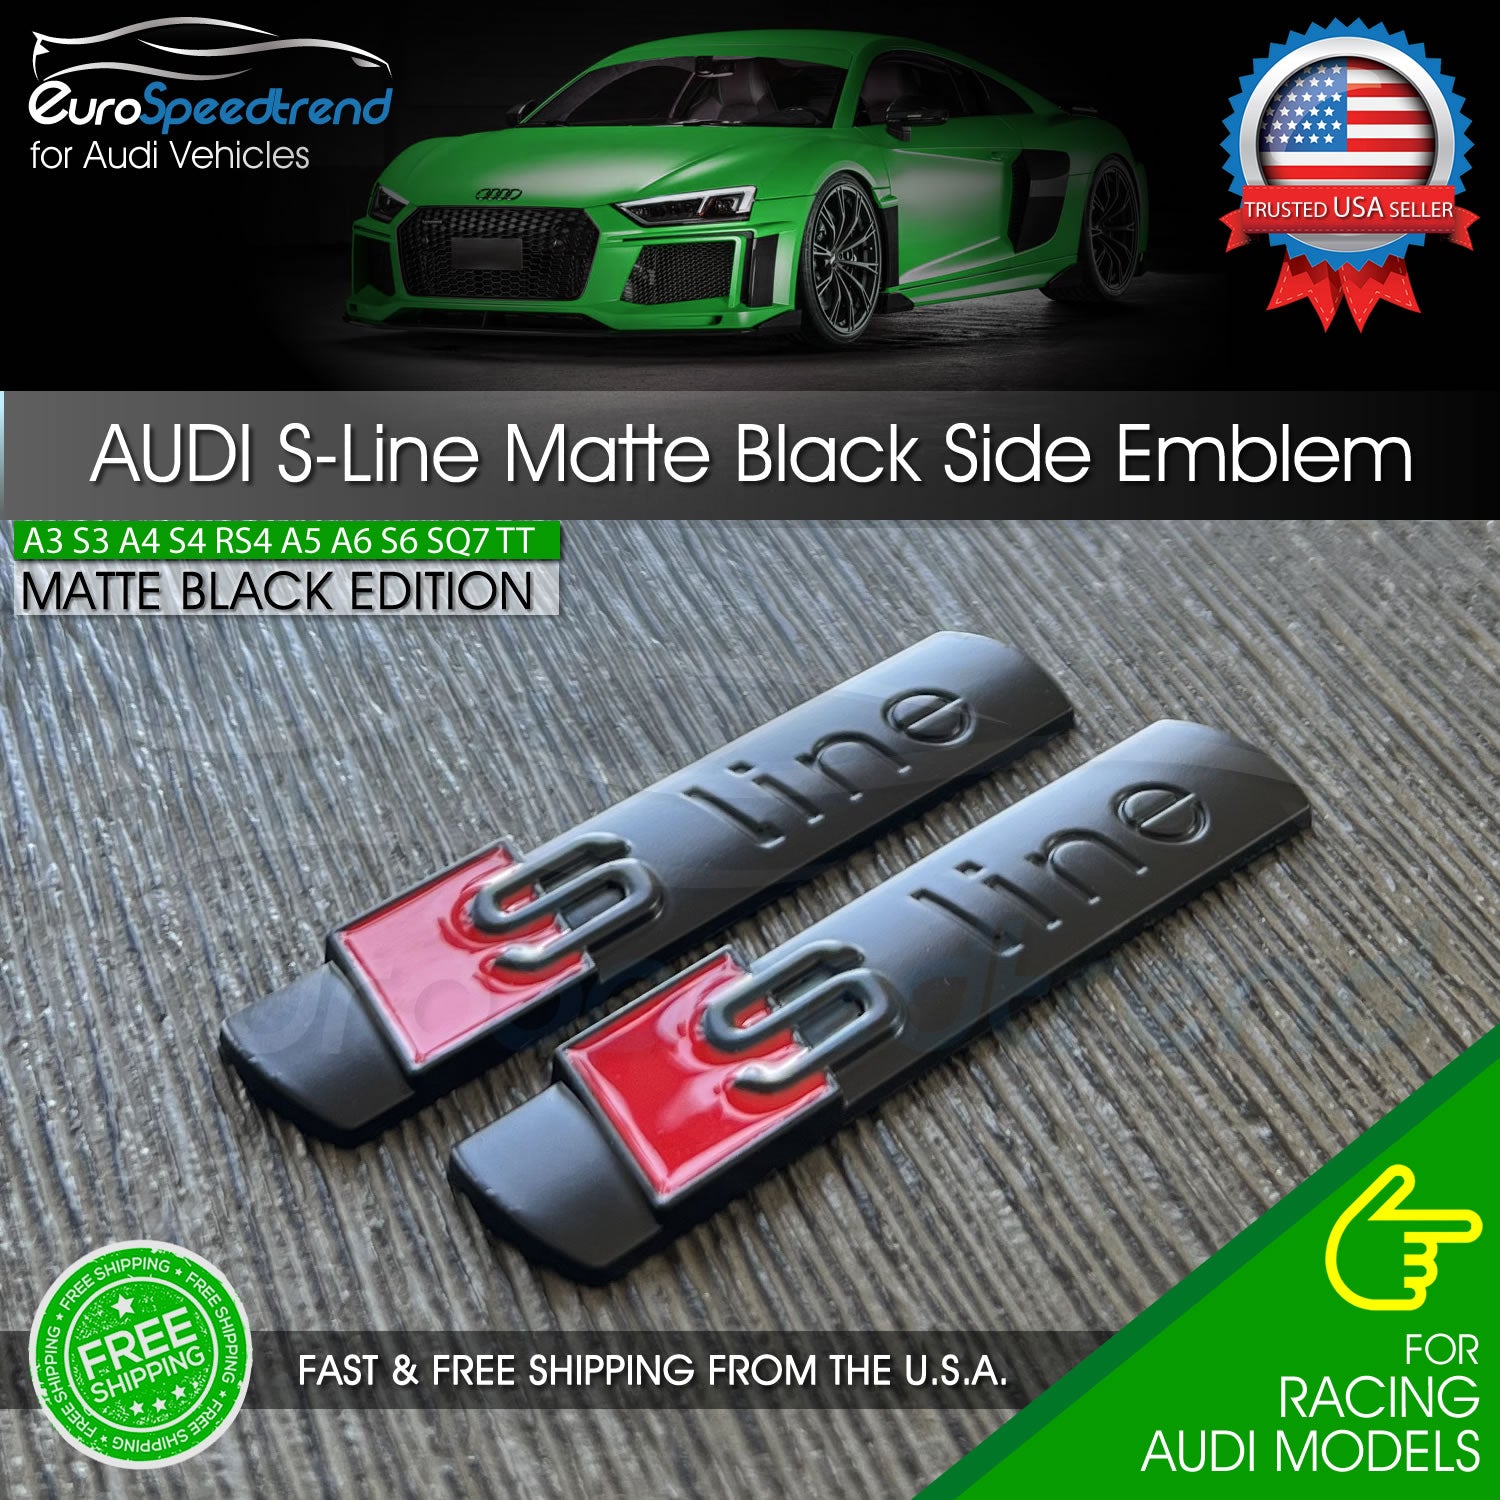 2x Audi S-Line Matte Black Badge Emblem 3D A3 A4 A5 A6 A7 Q5 TT Side F